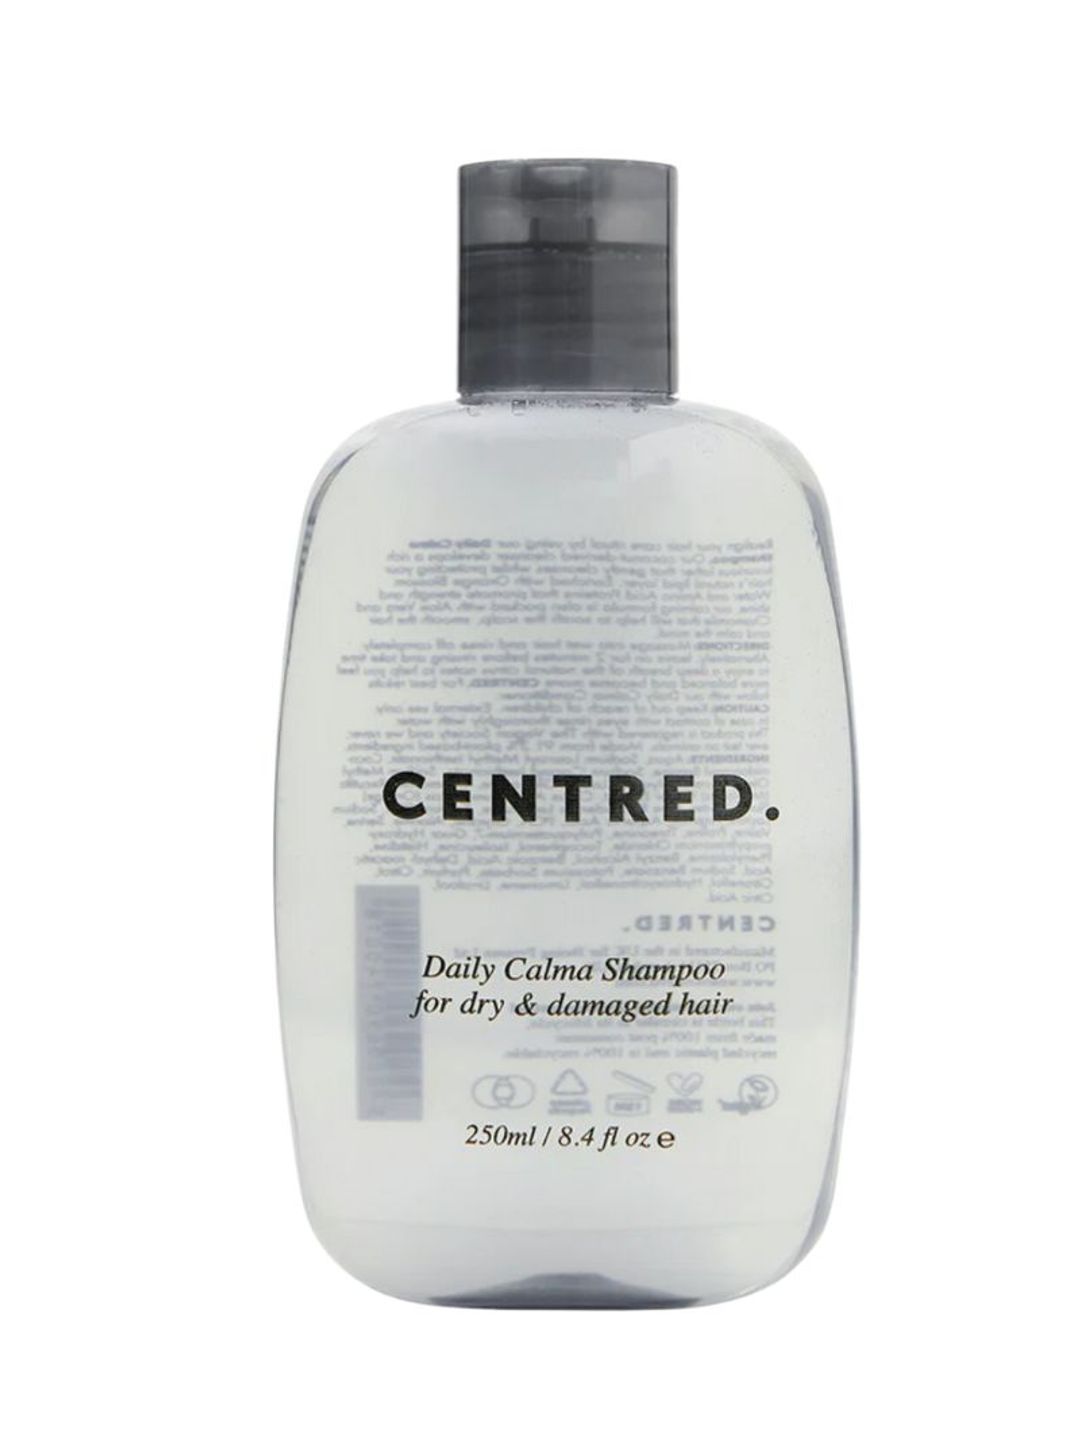 Centred shampoo bottle 